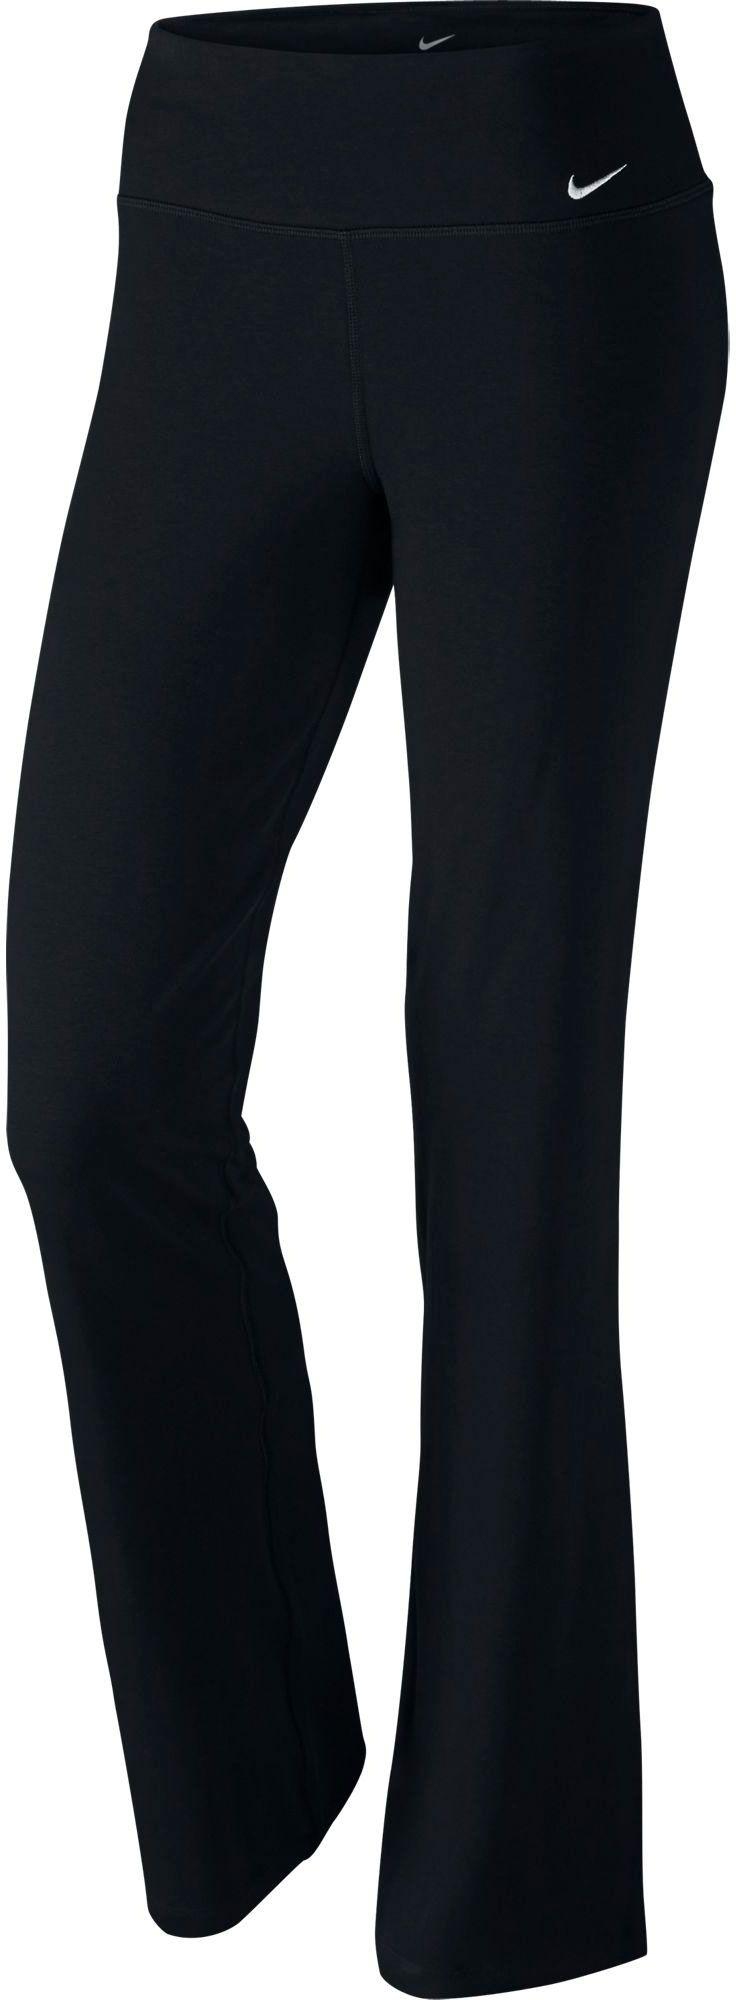 Nike Legend Dri-fit Cotton Classic Pants in Black - Lyst